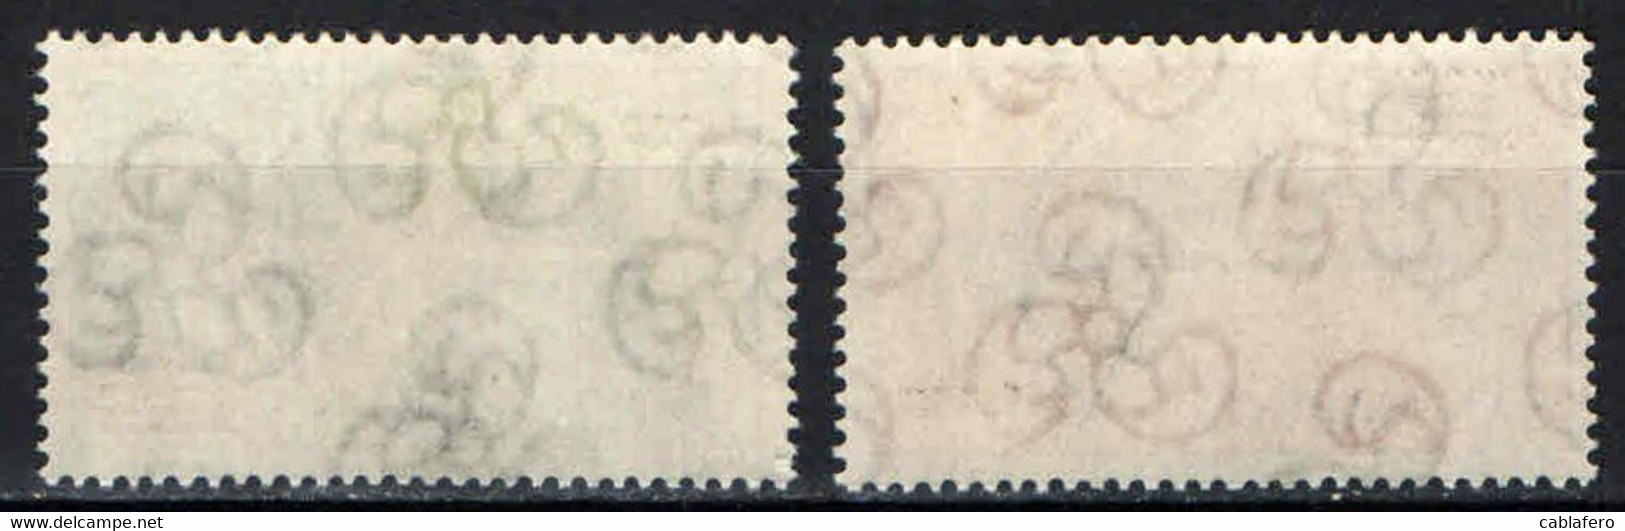 SAN MARINO - 1965 - BALESTRA CON SOVRASTAMPA - OVERPRINTED - MNH - Express Letter Stamps